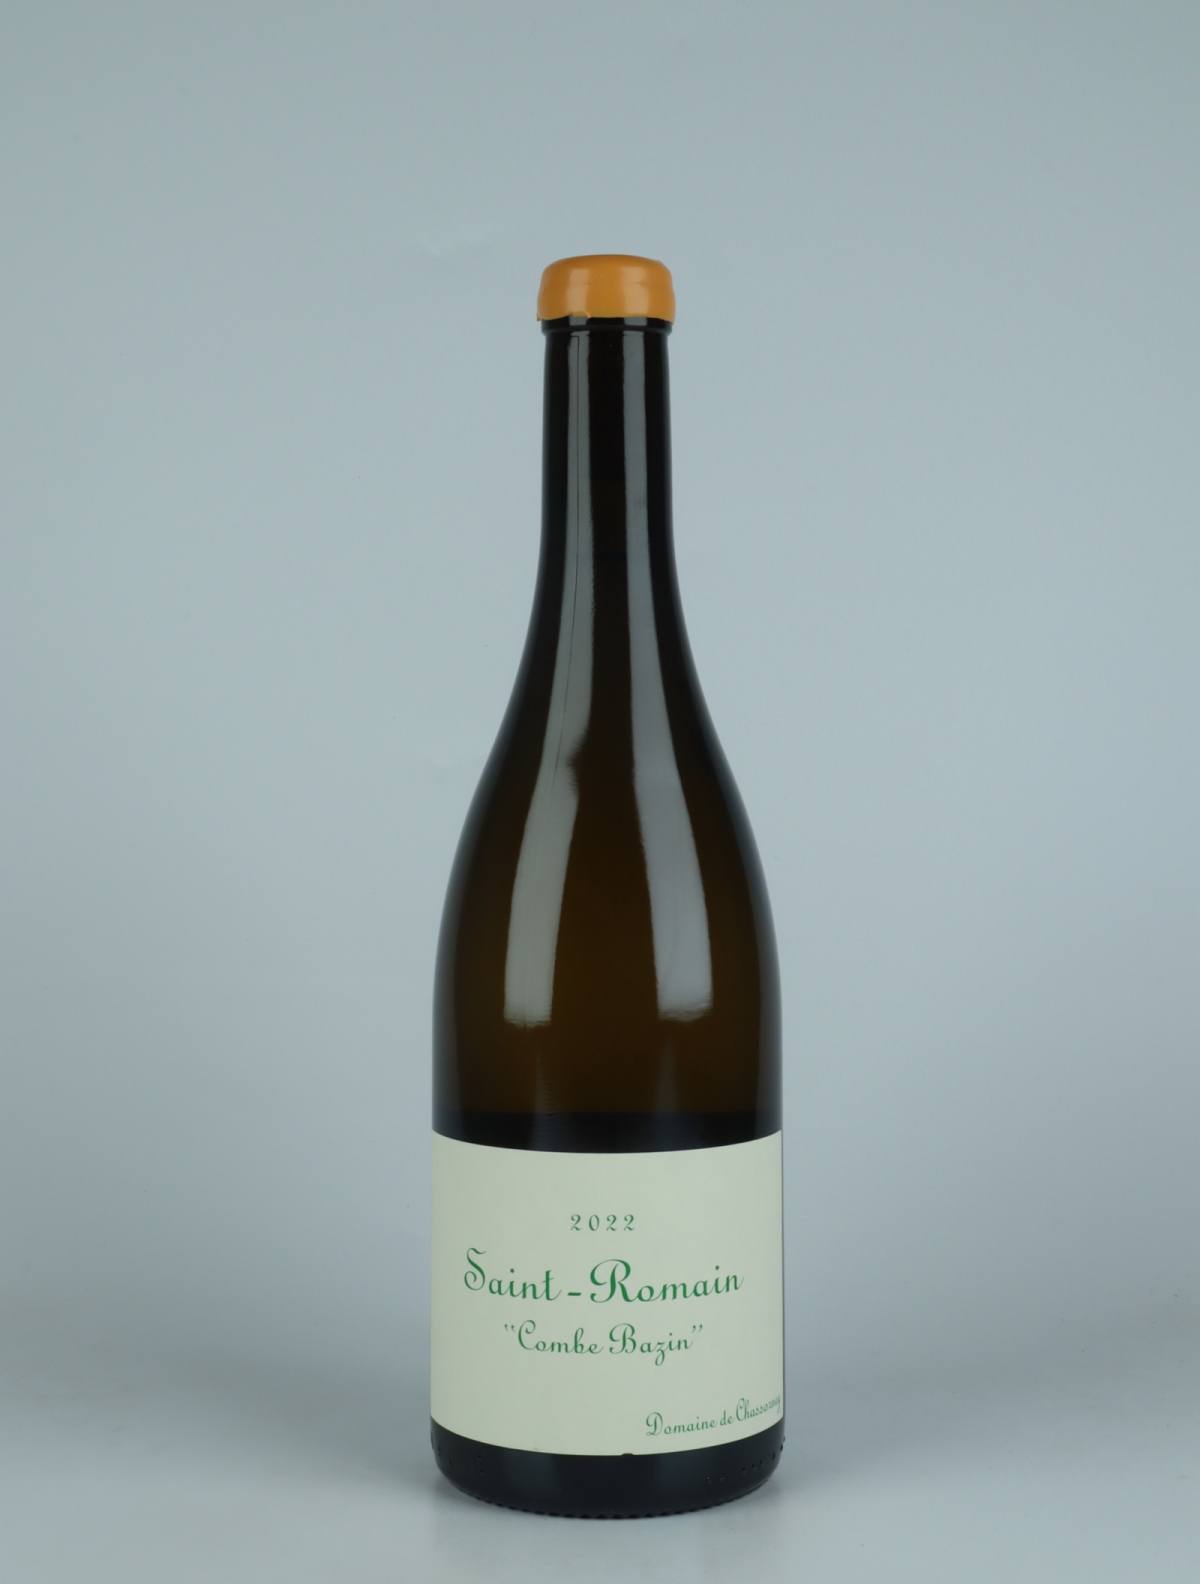 En flaske 2022 Saint Romain Blanc - Combe Bazin Hvidvin fra Domaine de Chassorney, Bourgogne i Frankrig